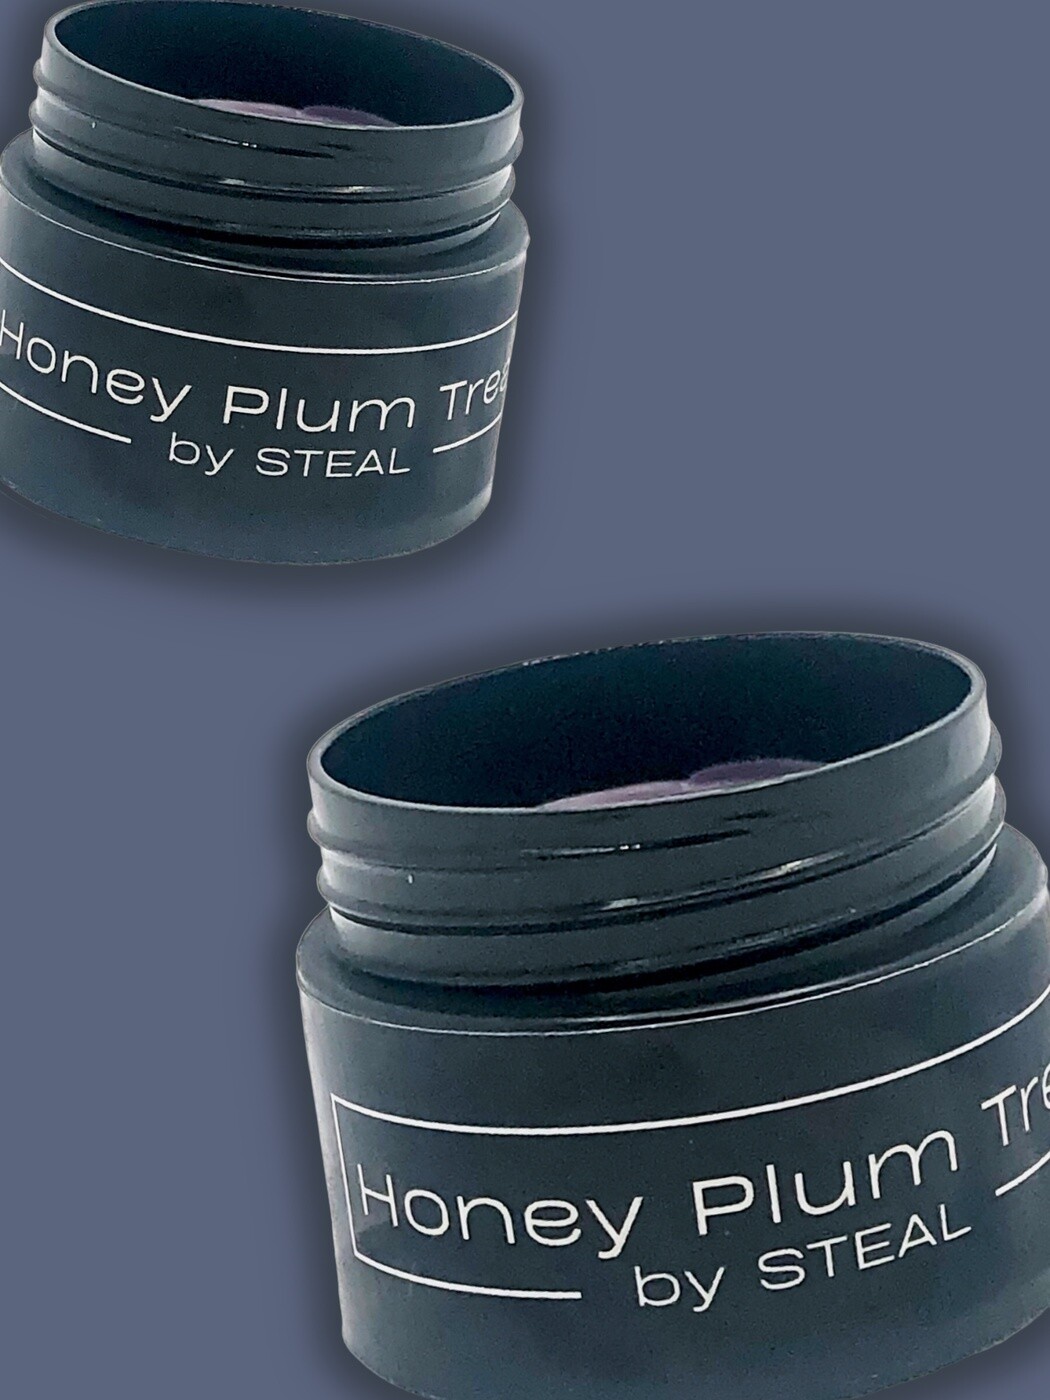 Honey Plum Treat